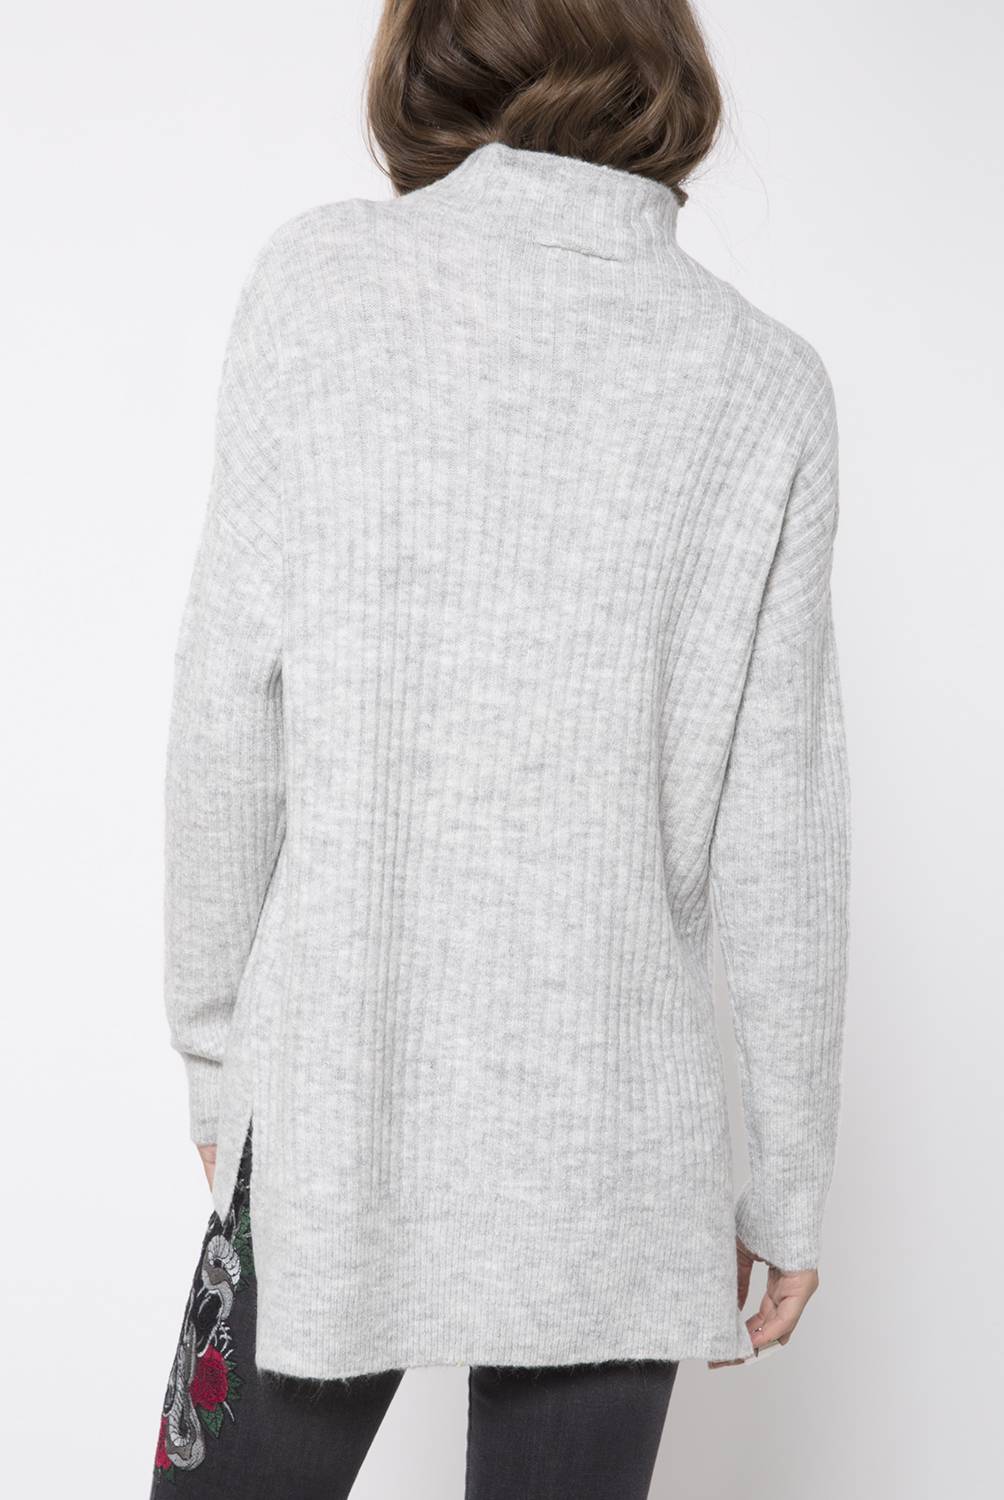 DENIMLAB - Sweater Rib Cuello